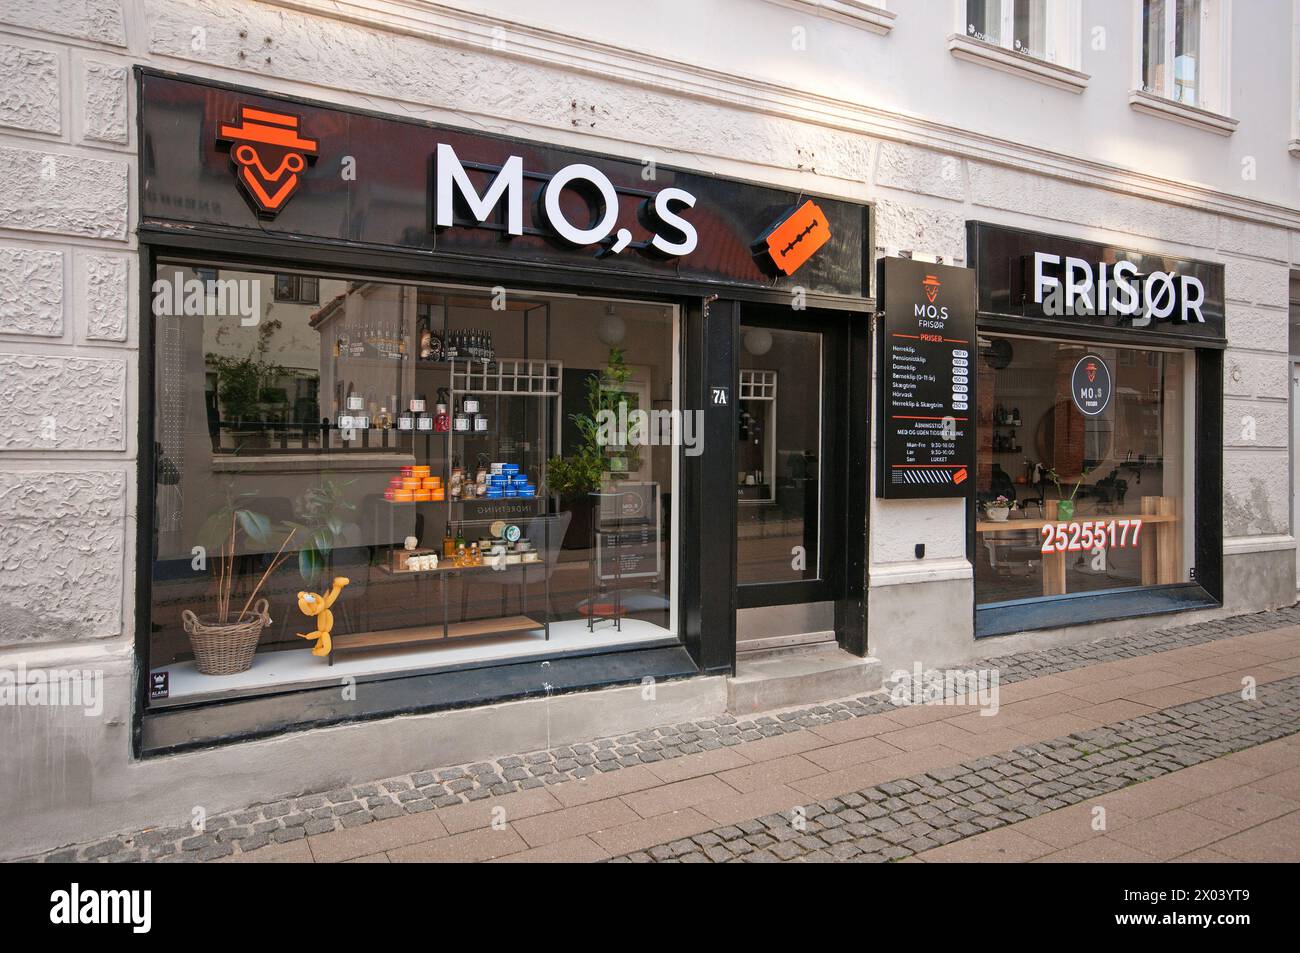 Mo,s barber shop in Helsingor, Denmark Stock Photo